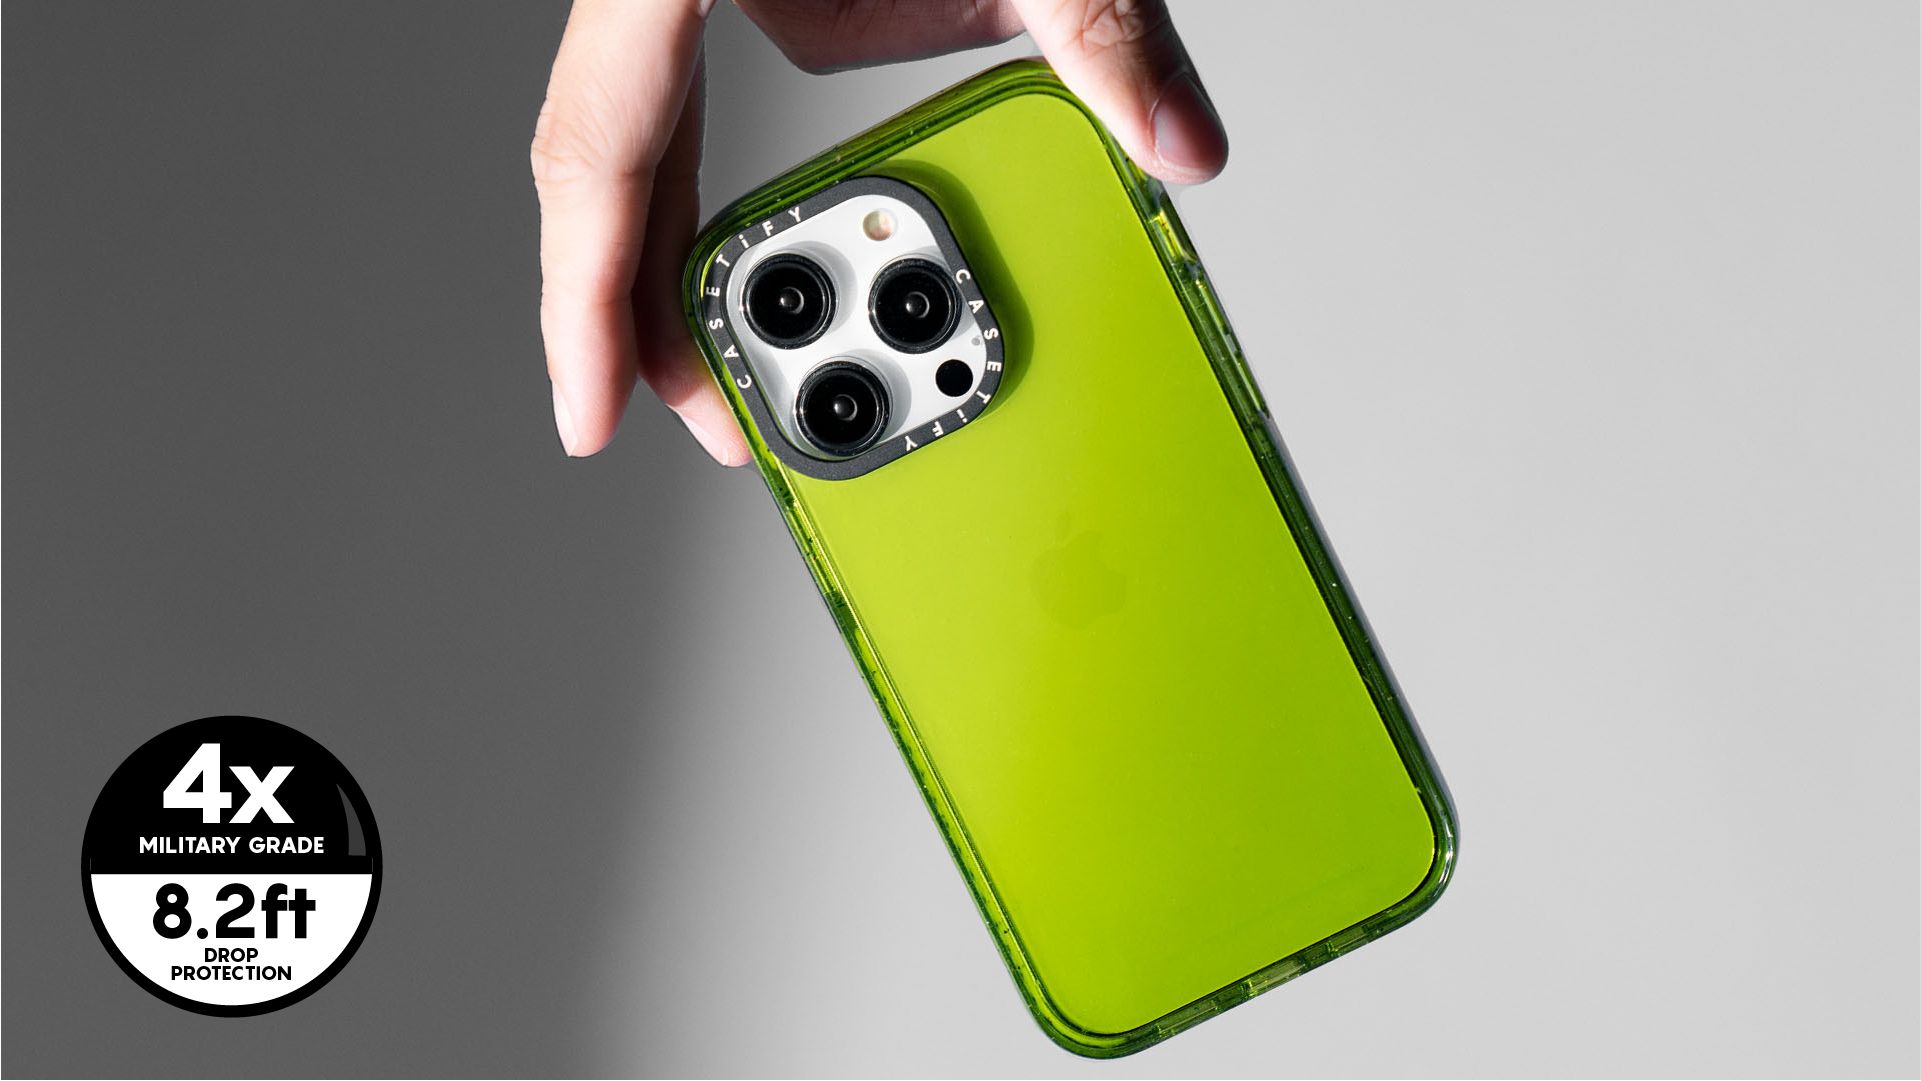  CASETiFY Impact Case for iPhone 11 - Acid Smiles Neon